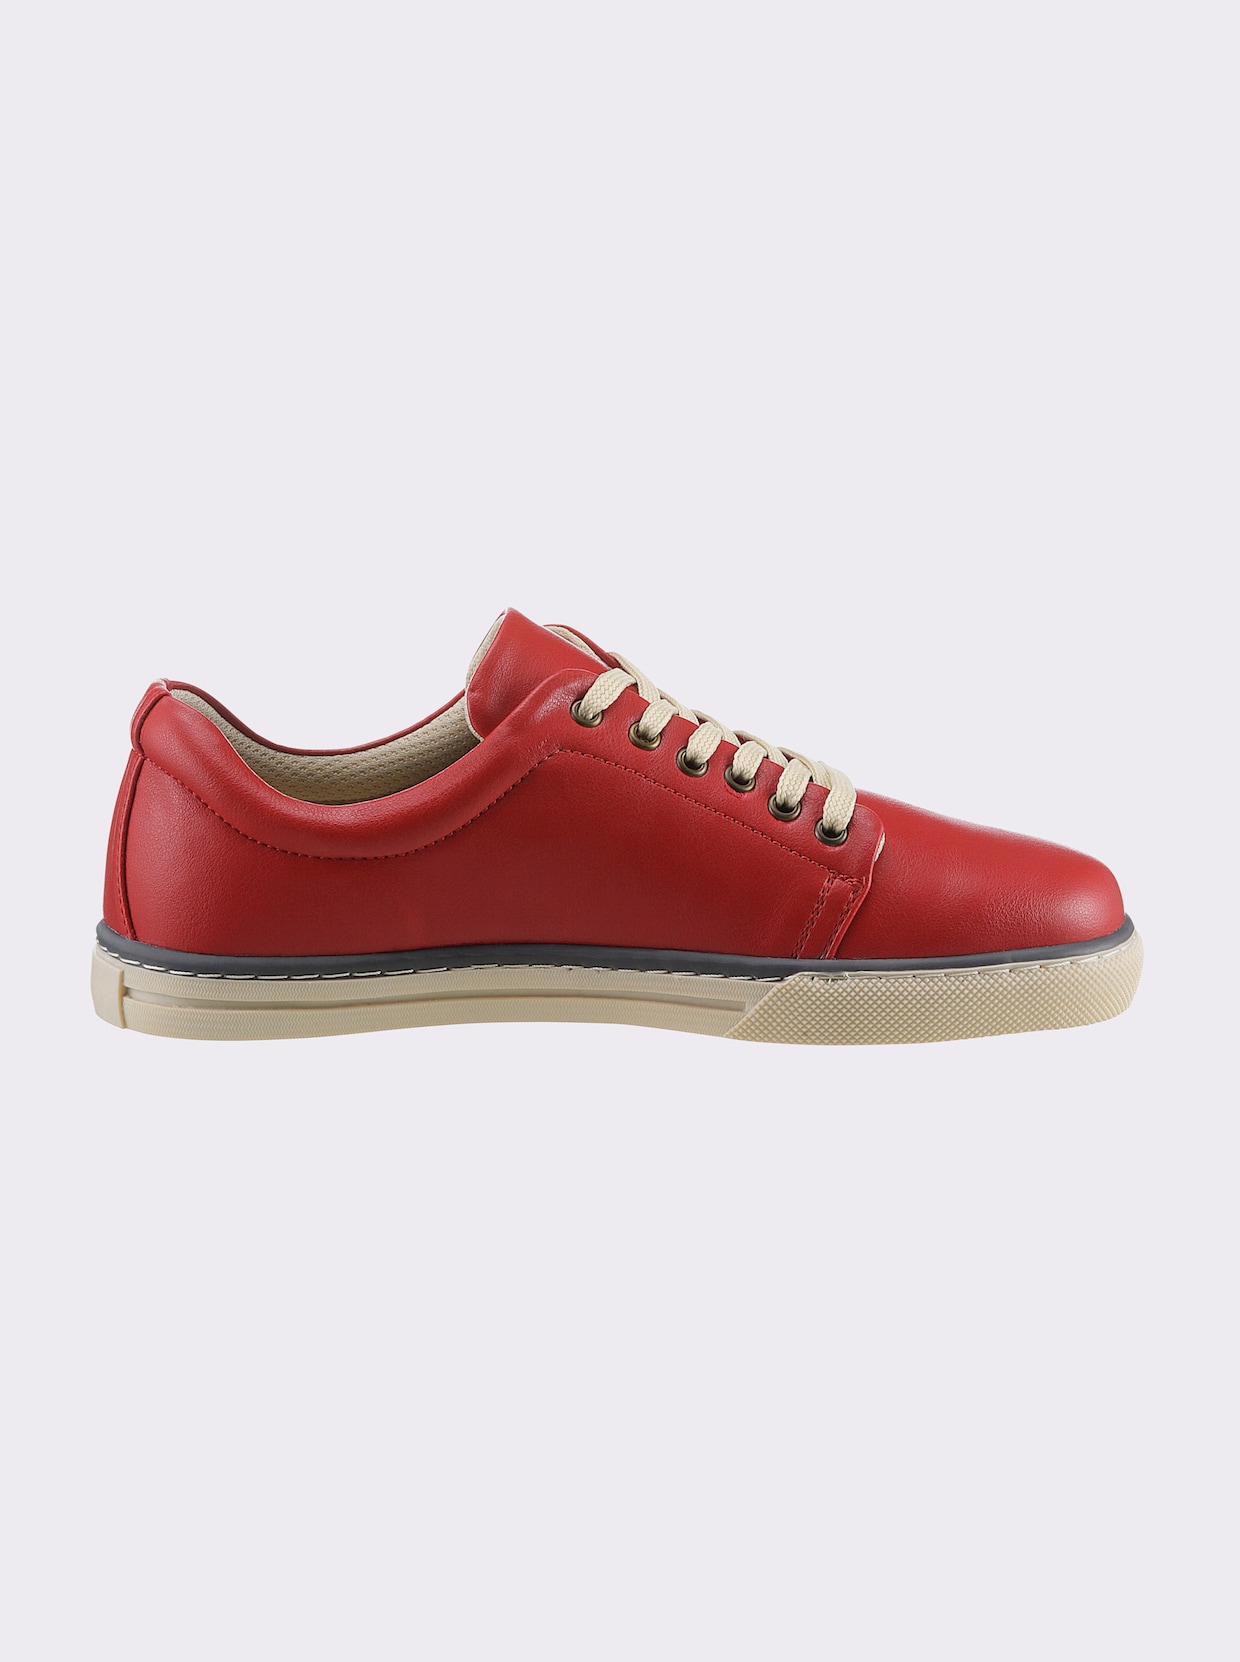 Andrea Conti Chaussures à lacets - rouge